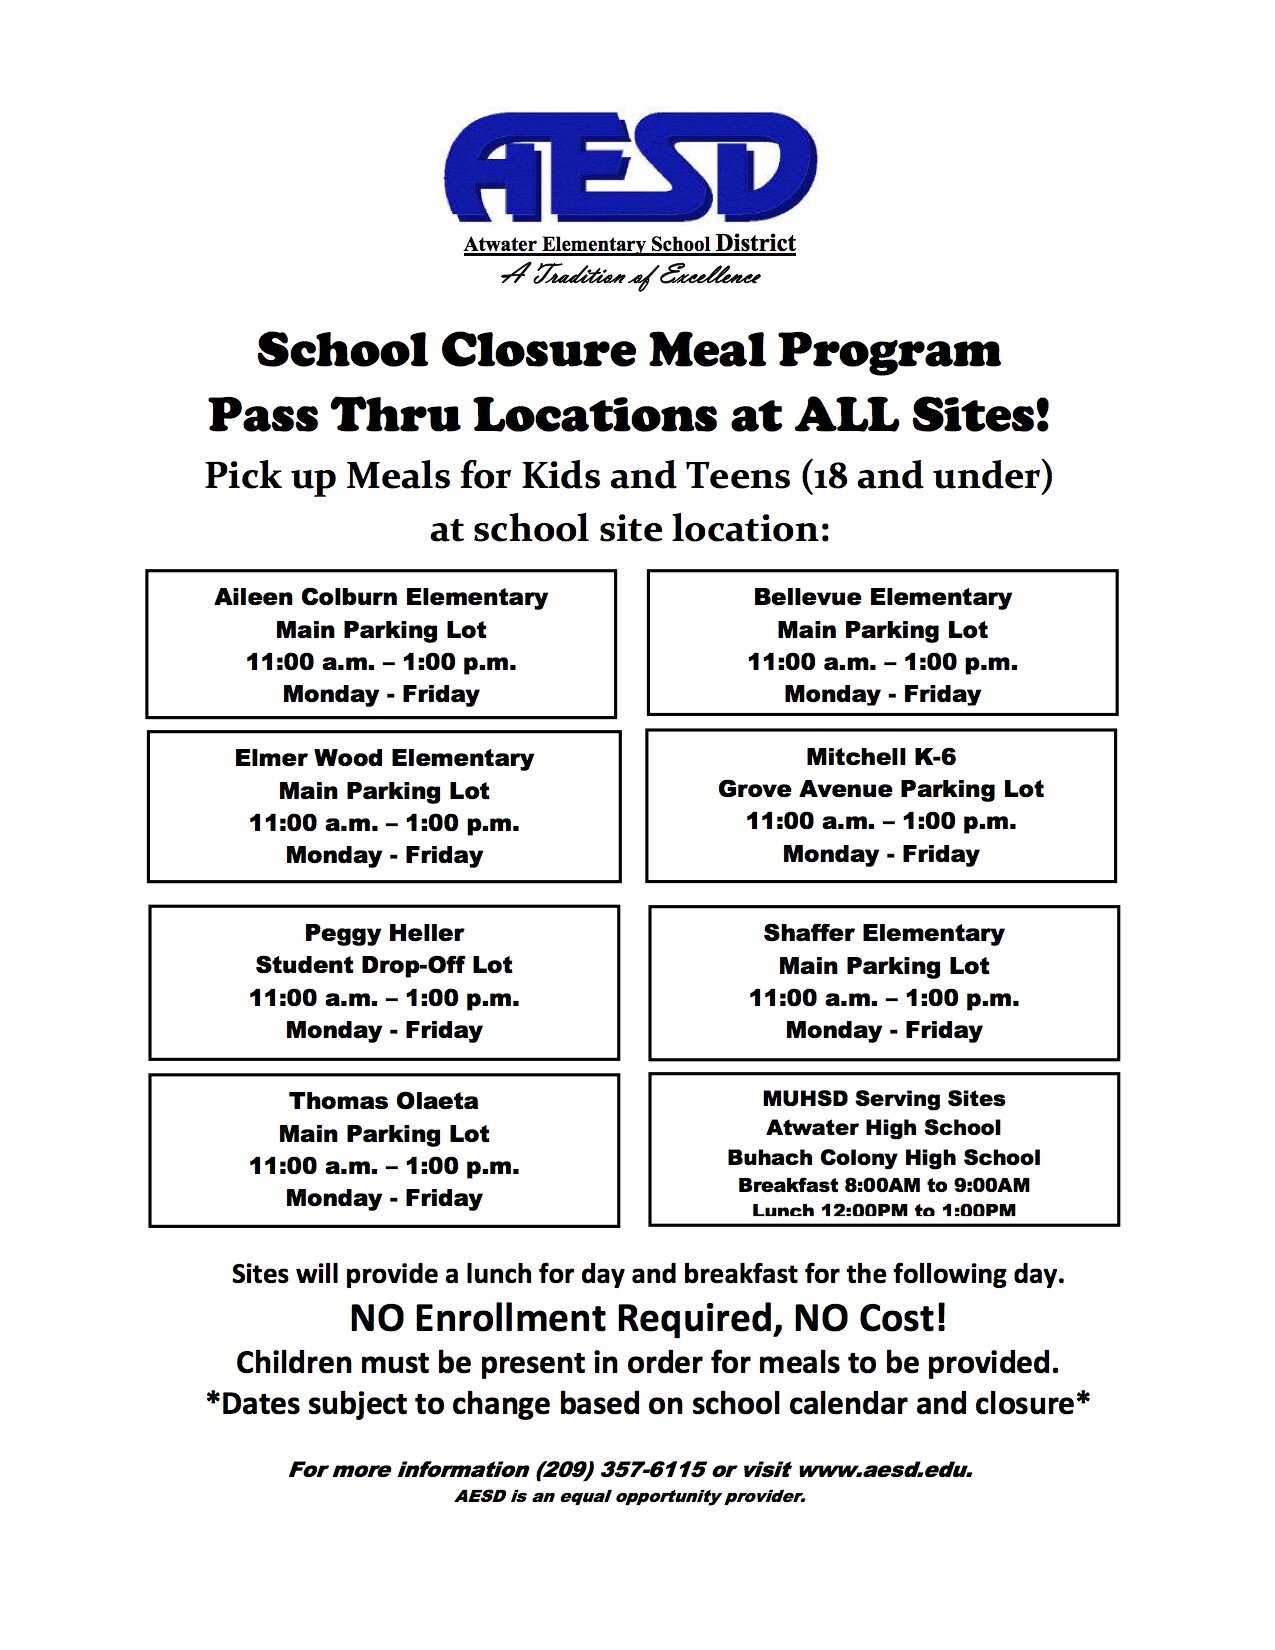 AESD School Closure Meal Program Flyer 2020.jpg